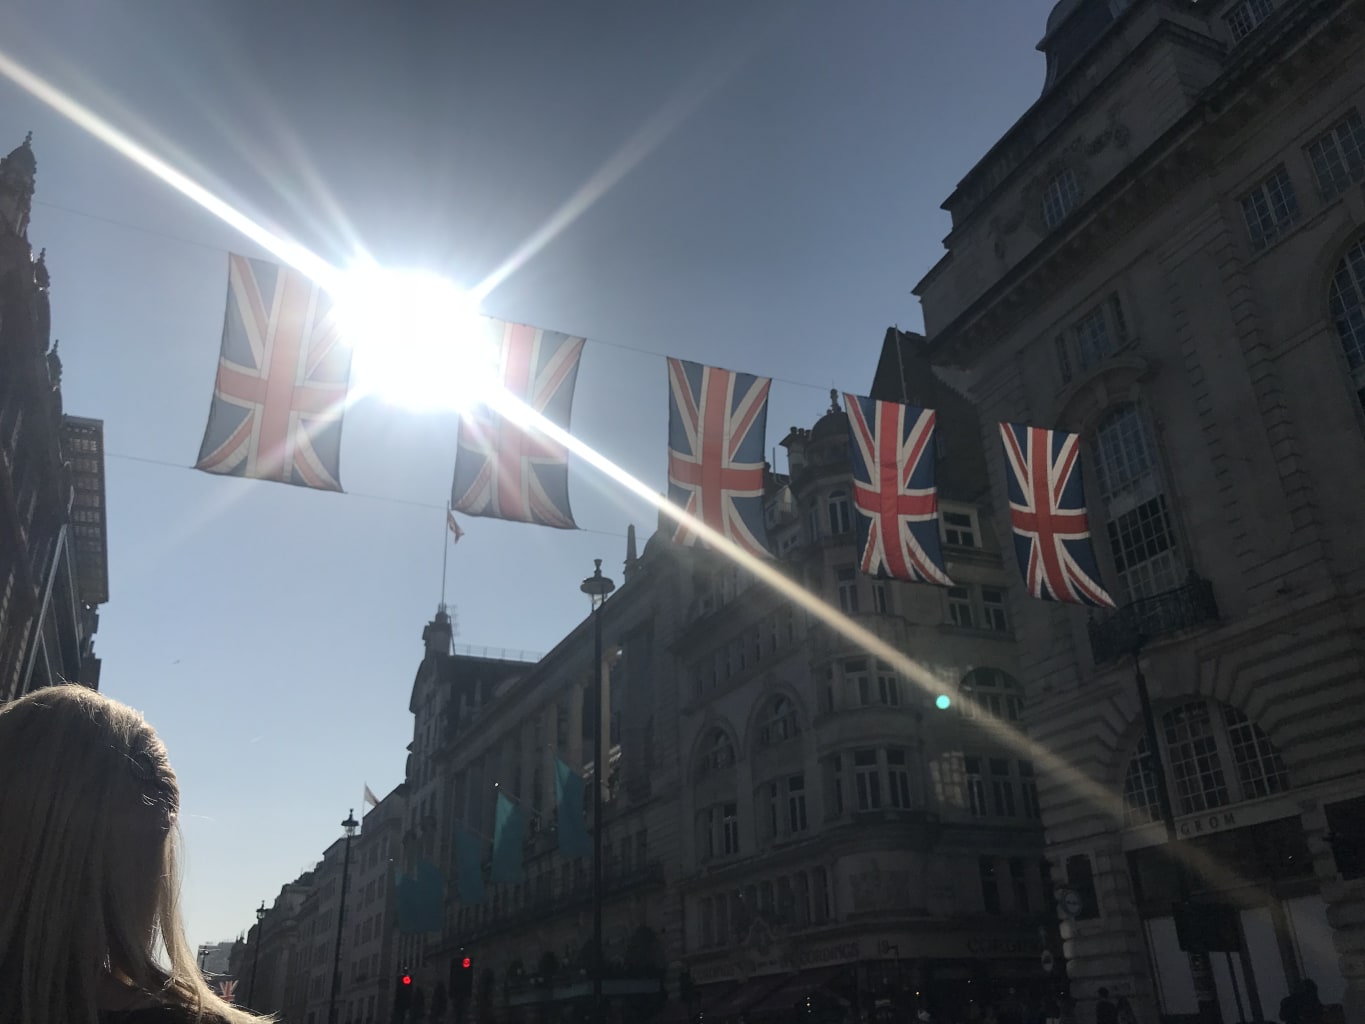 United Kingdom flags hung across a street.